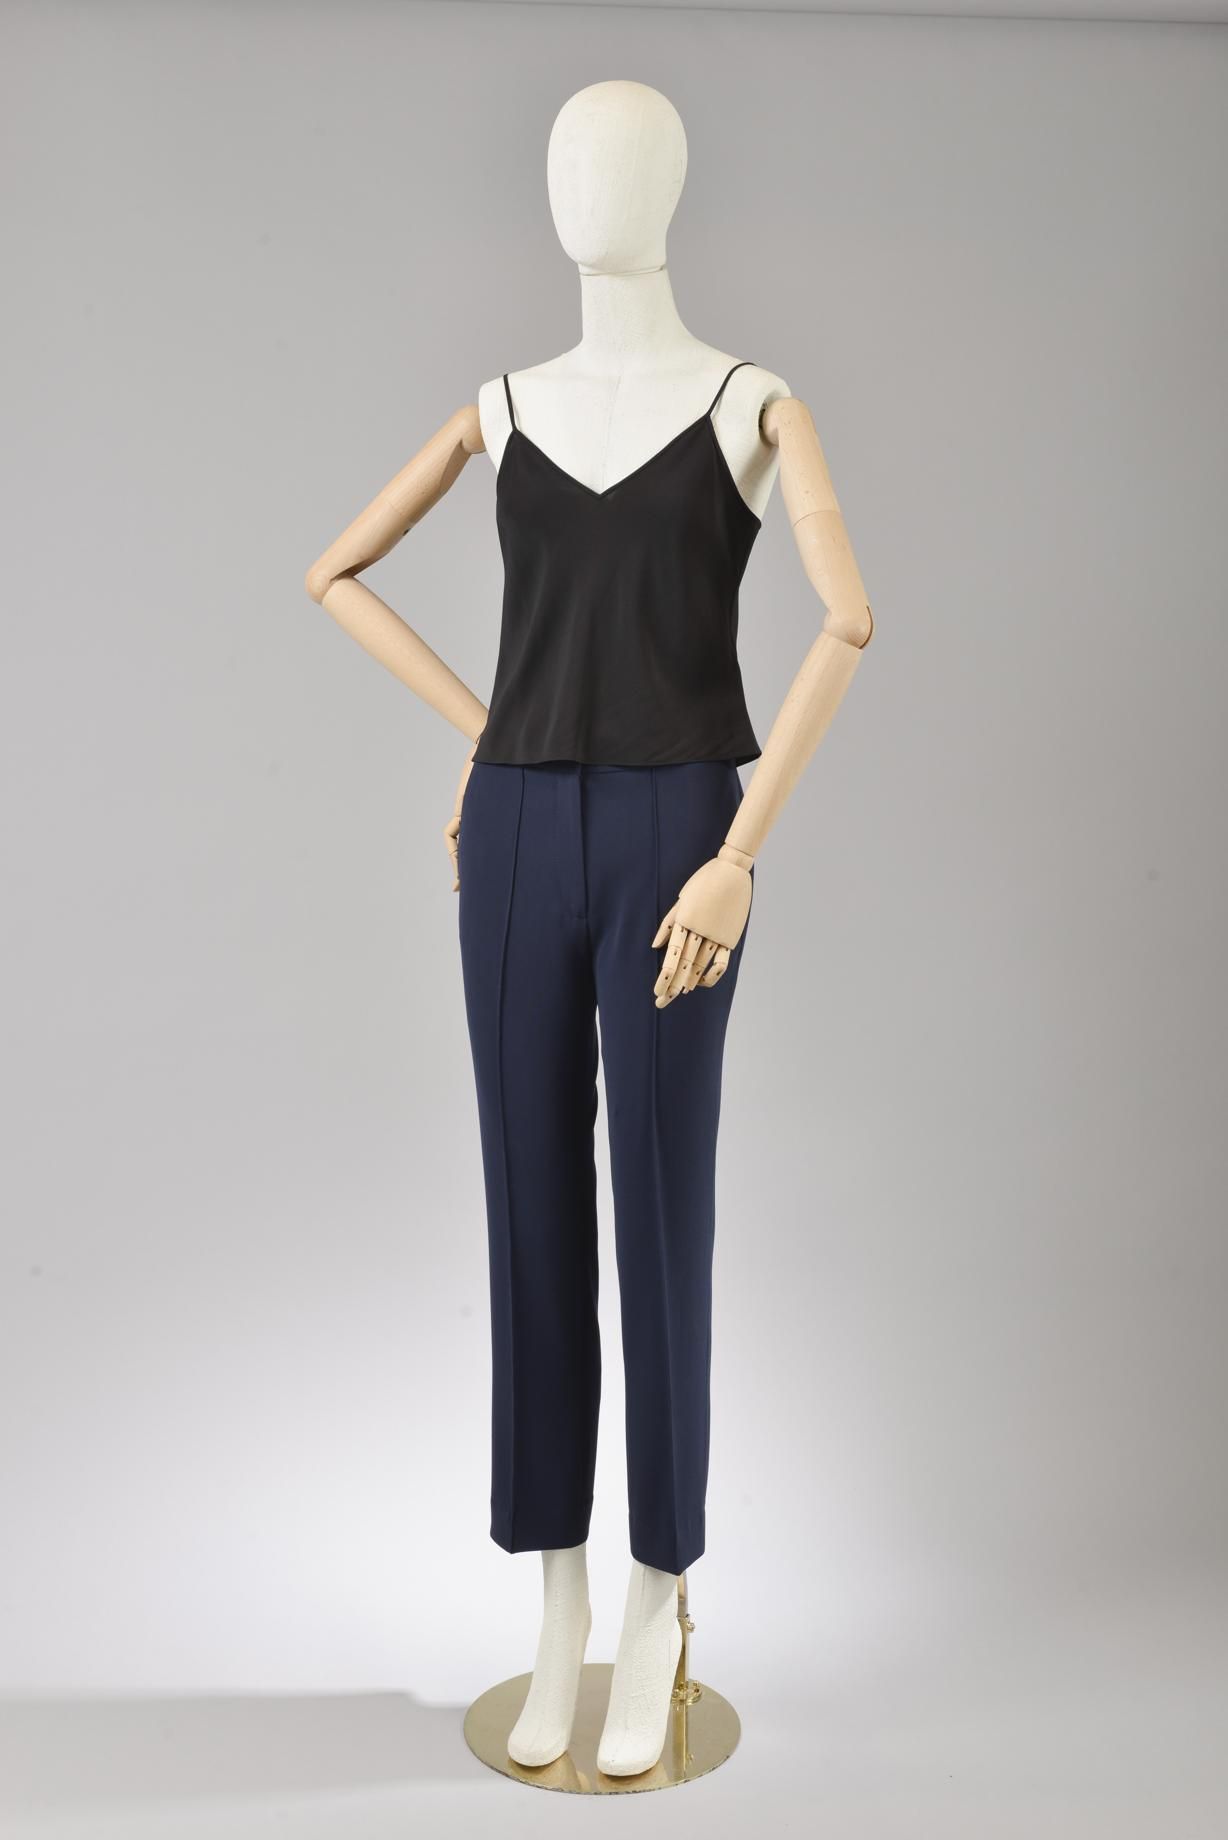 Null *尺寸S DVF - Diane Von Fürstenberg

套装包括。

-丝质绉绸吊带衫，型号为 "DVF Cami"，纯黑色。

零售价：&hellip;